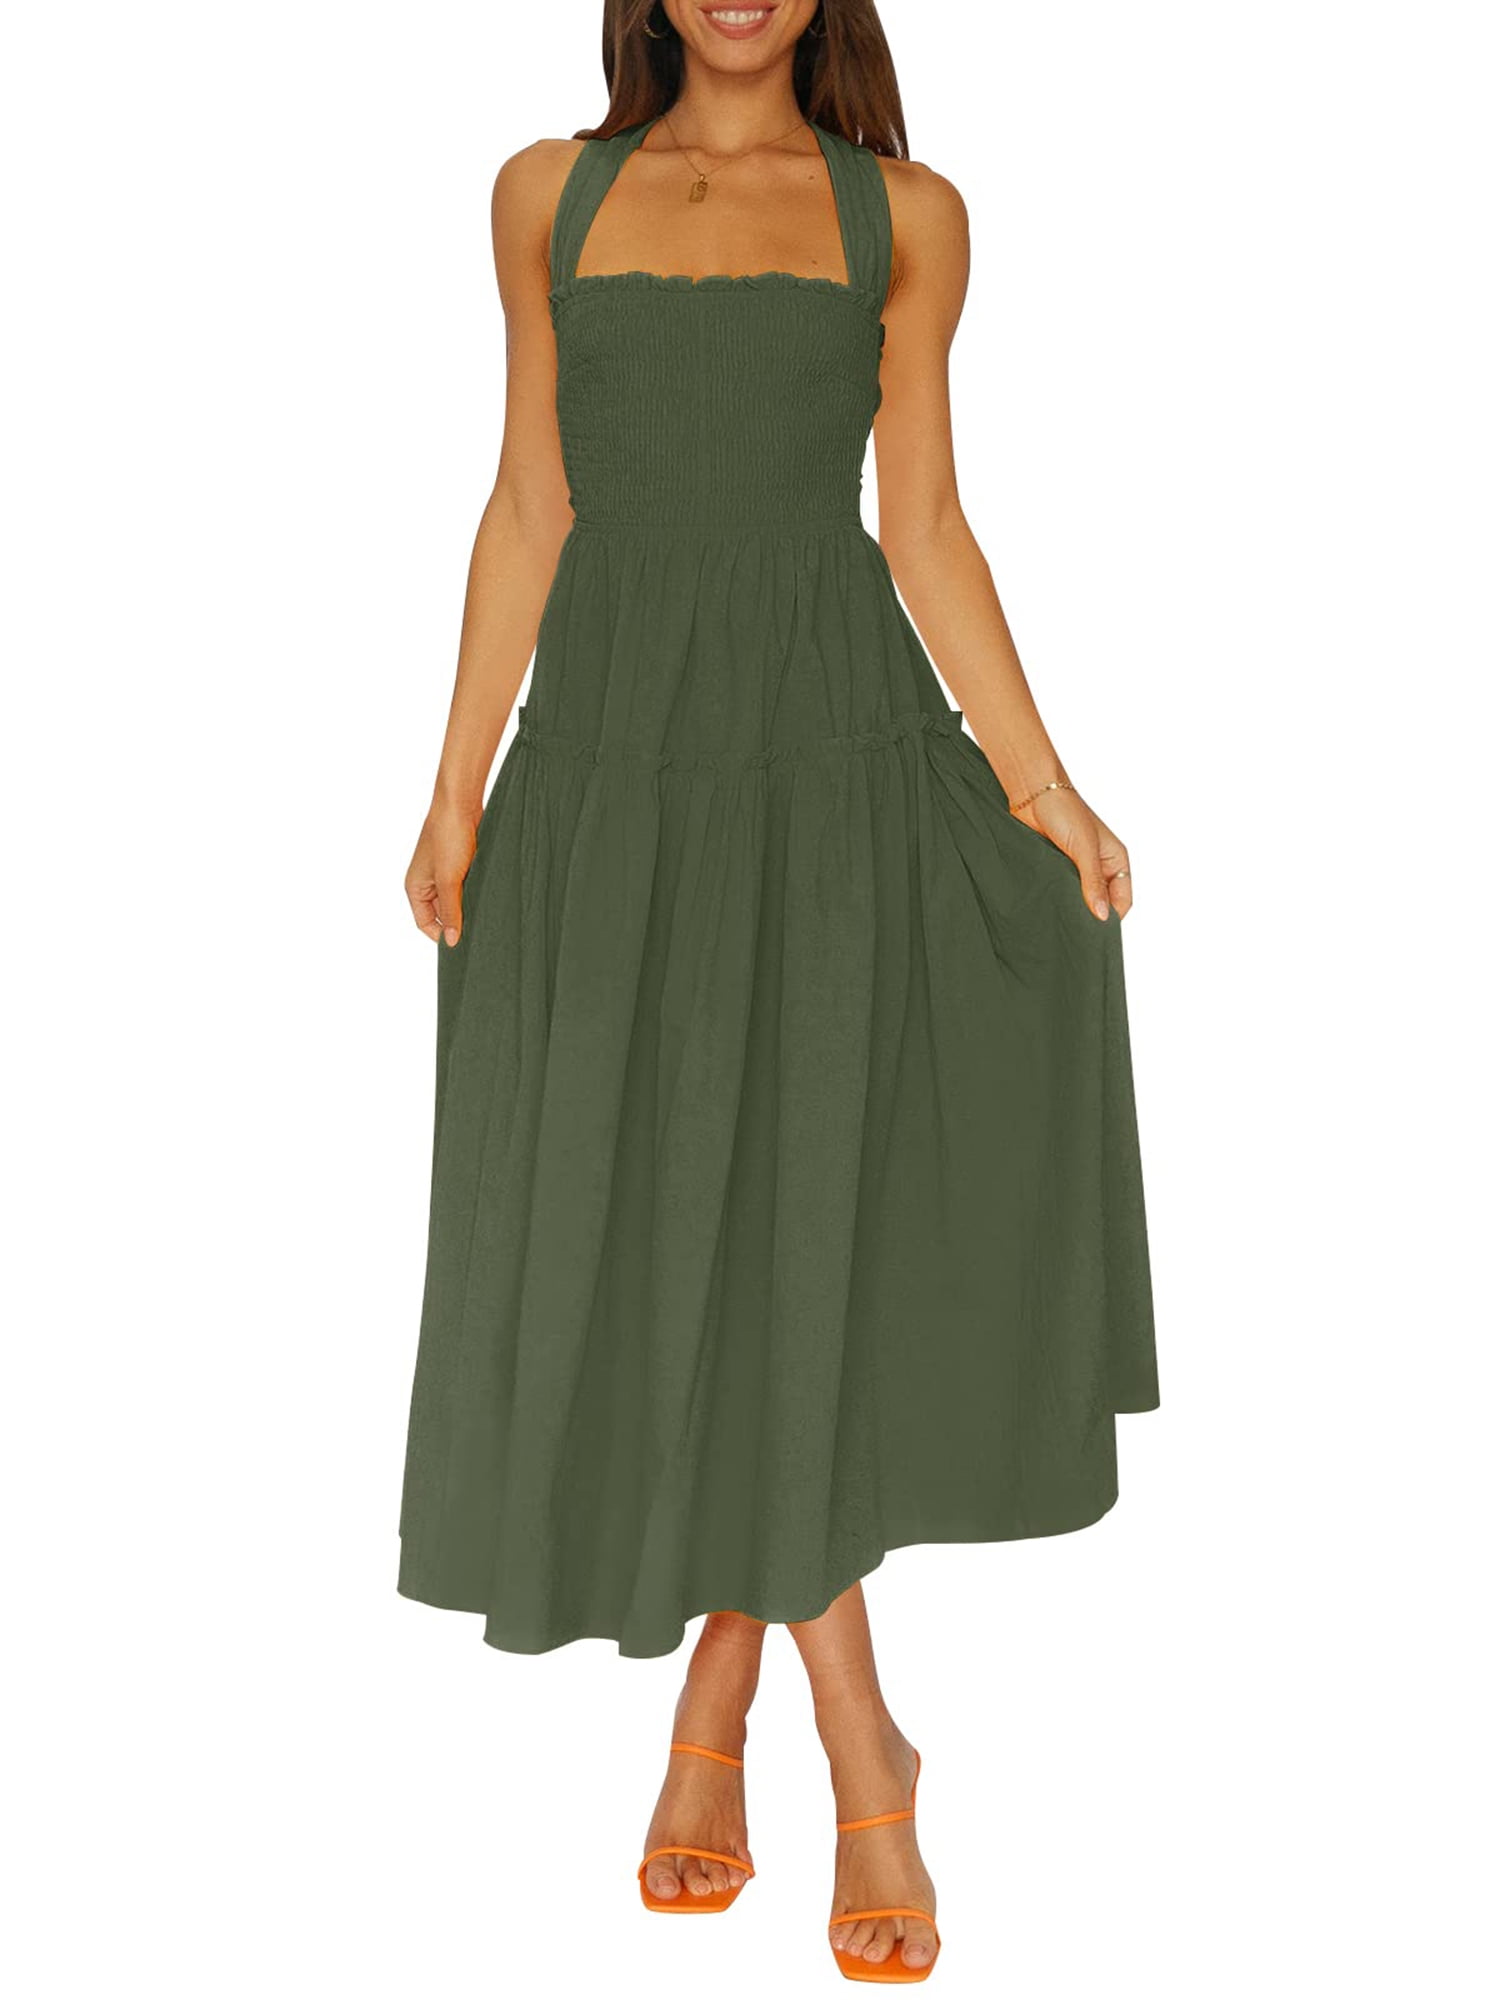 Long Dress Maxi Summer Dress Backless Dress Open Back by BIBICCO, $320.00